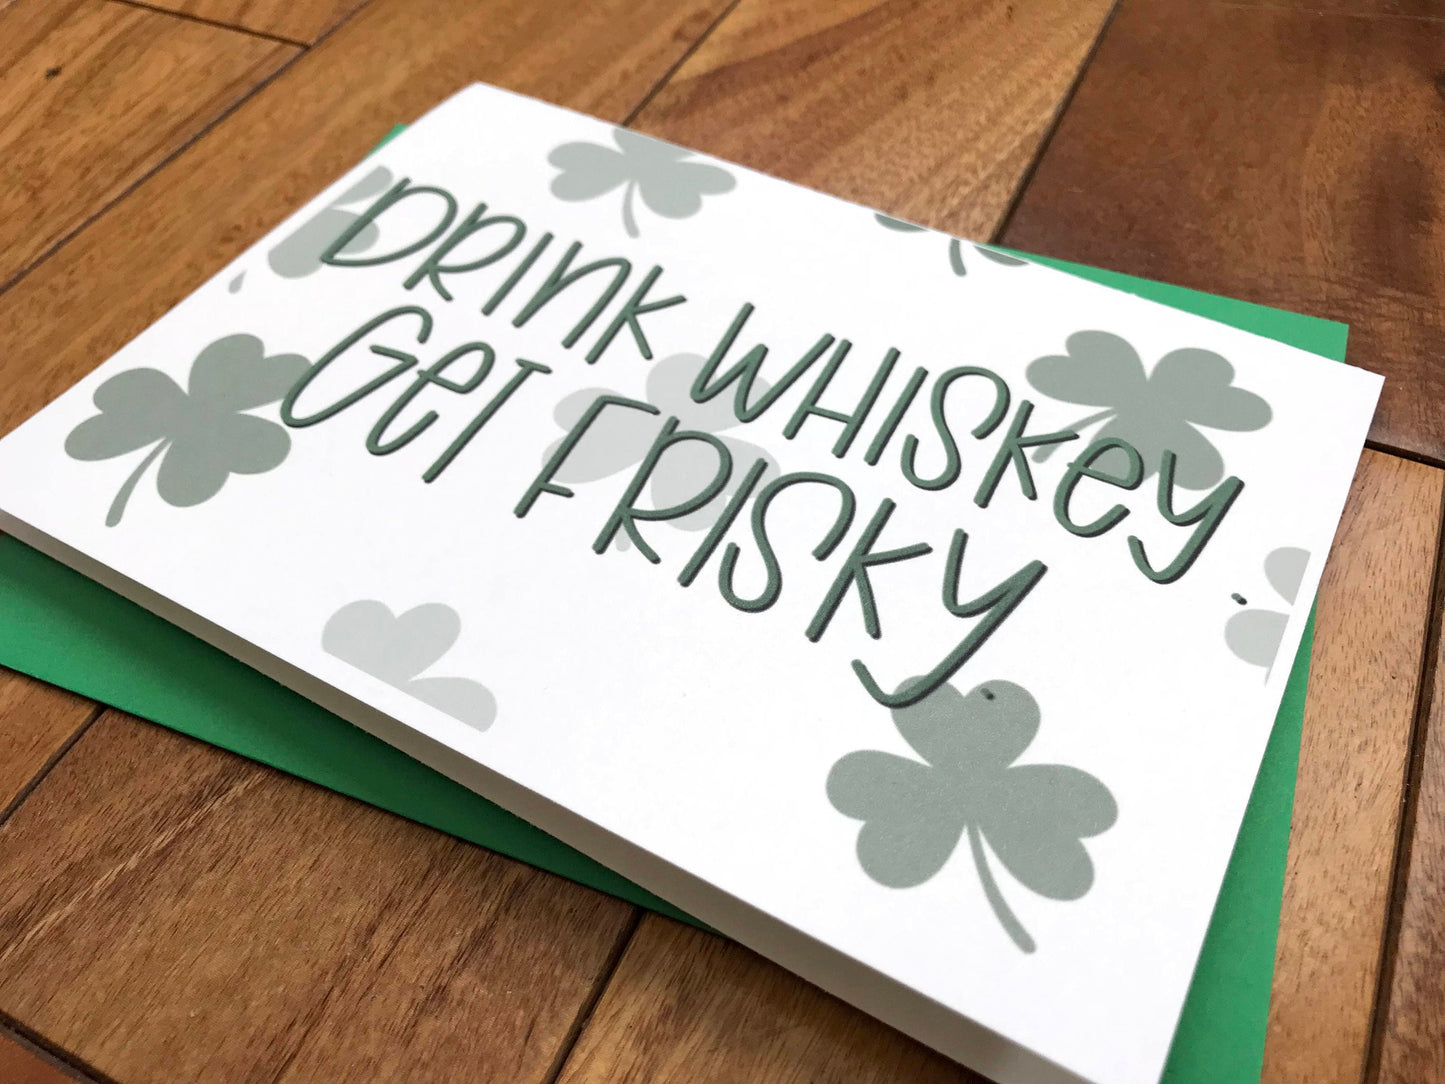 Drink Whiskey Get Frisky by StoneDonut Design